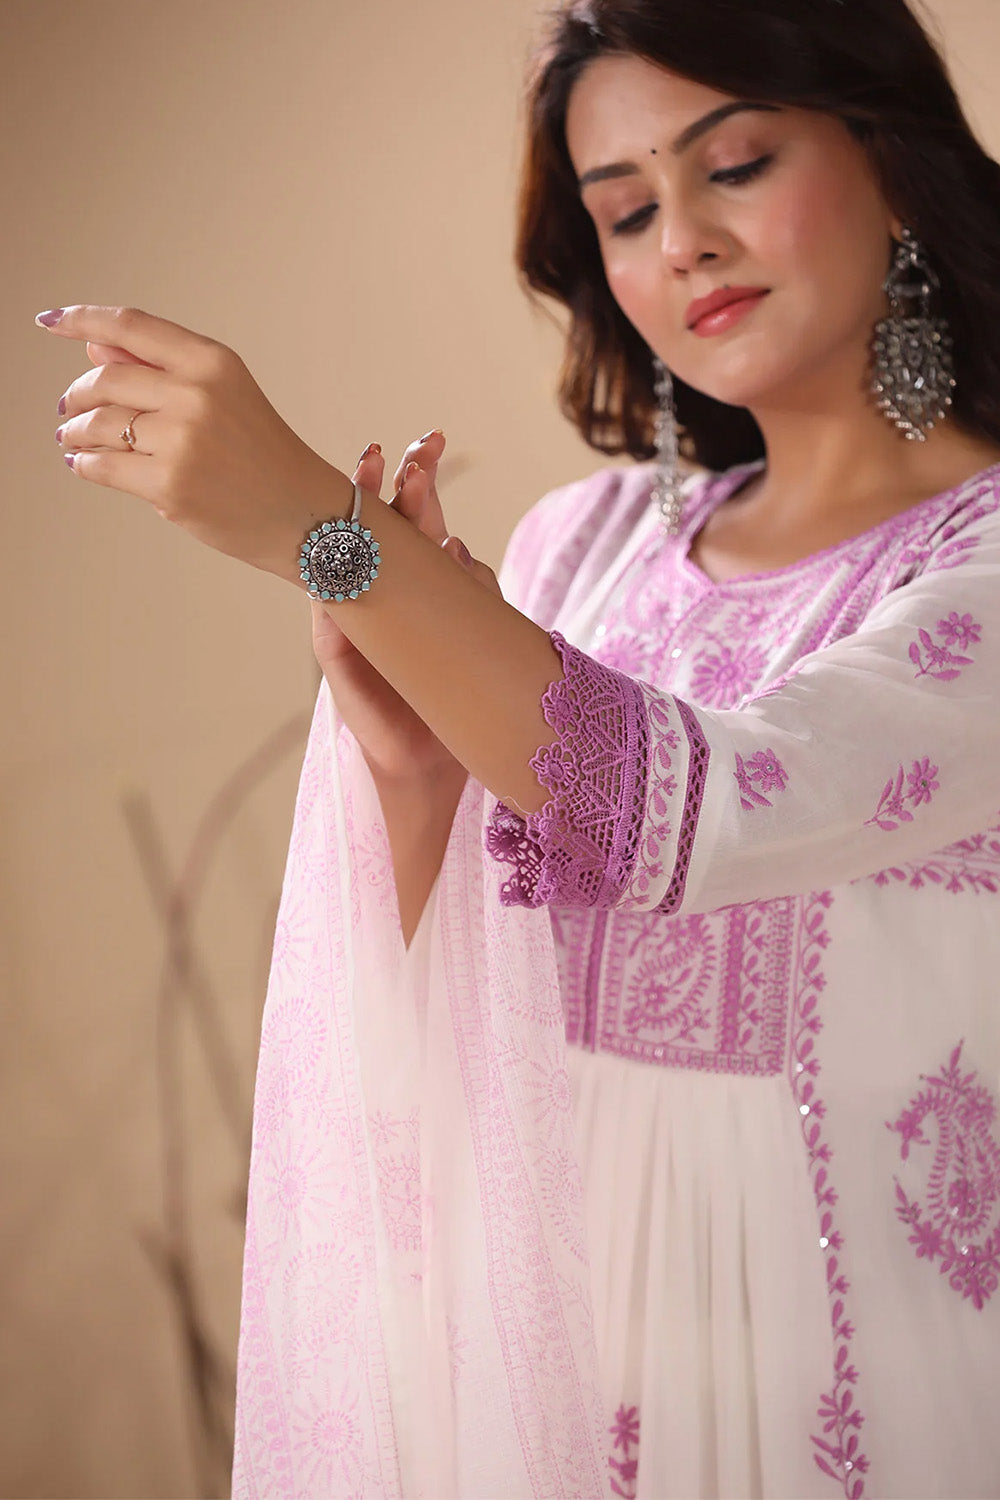 White Color Cotton Resham Embroidered Anarkali Suit